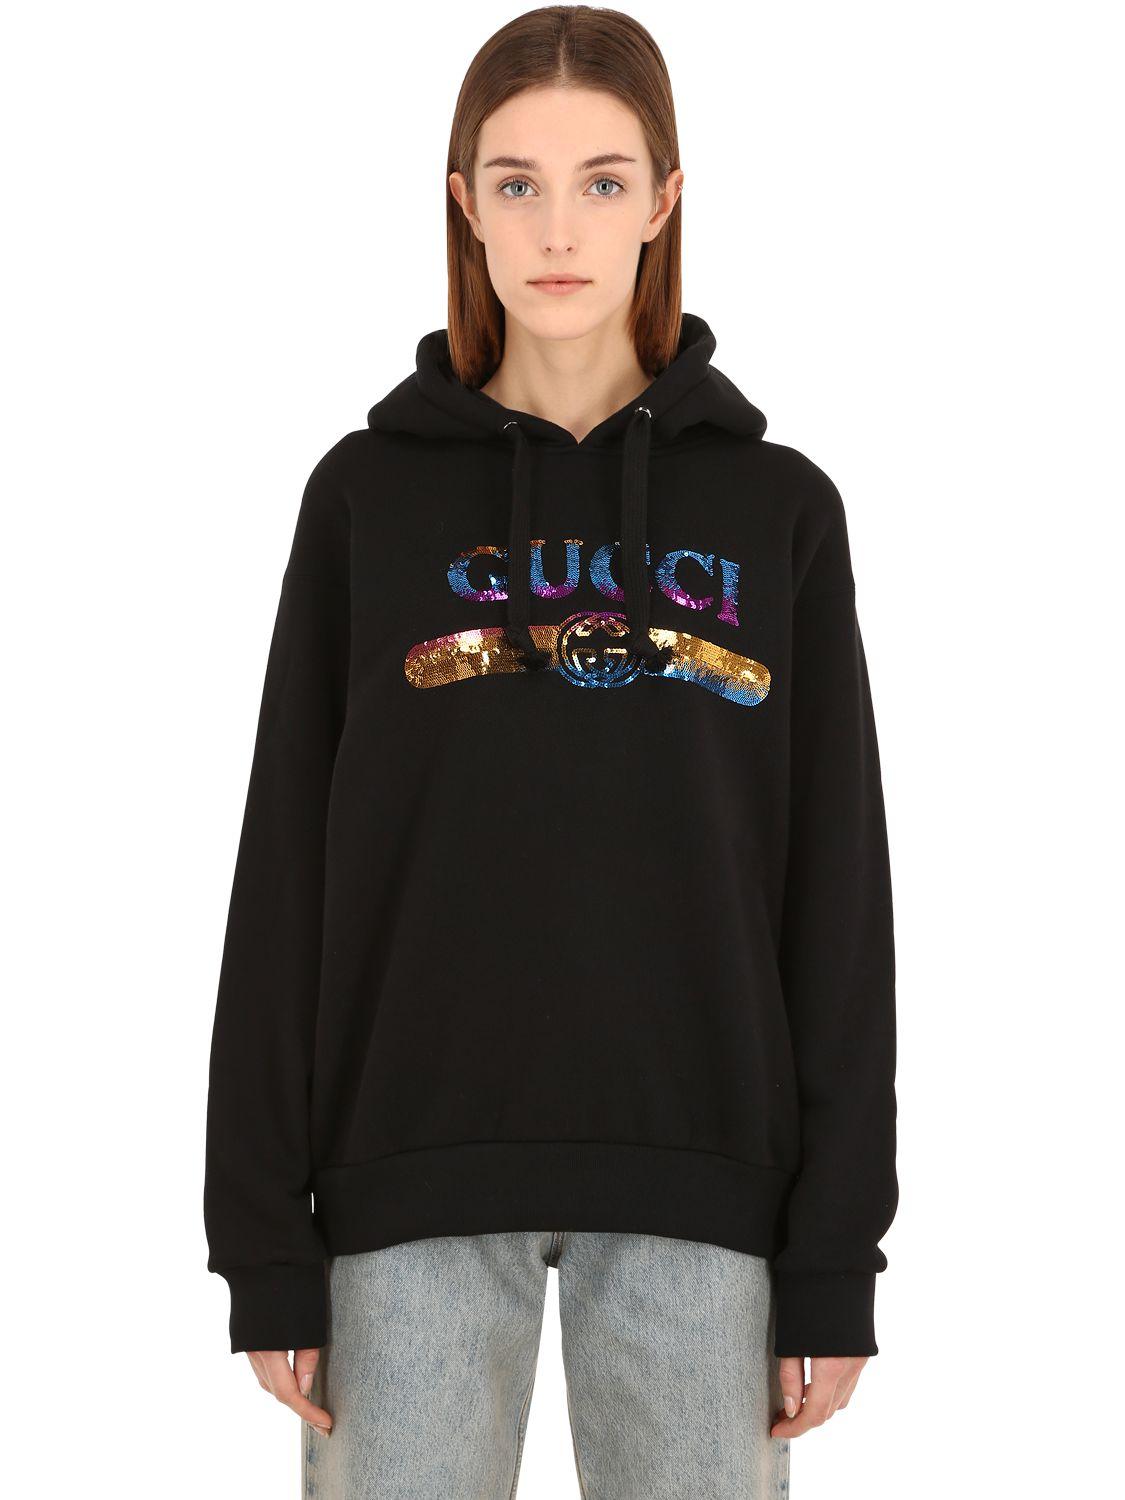 Gucci Sequined Logo Cotton Sweatshirt Hoodie in Black - Lyst